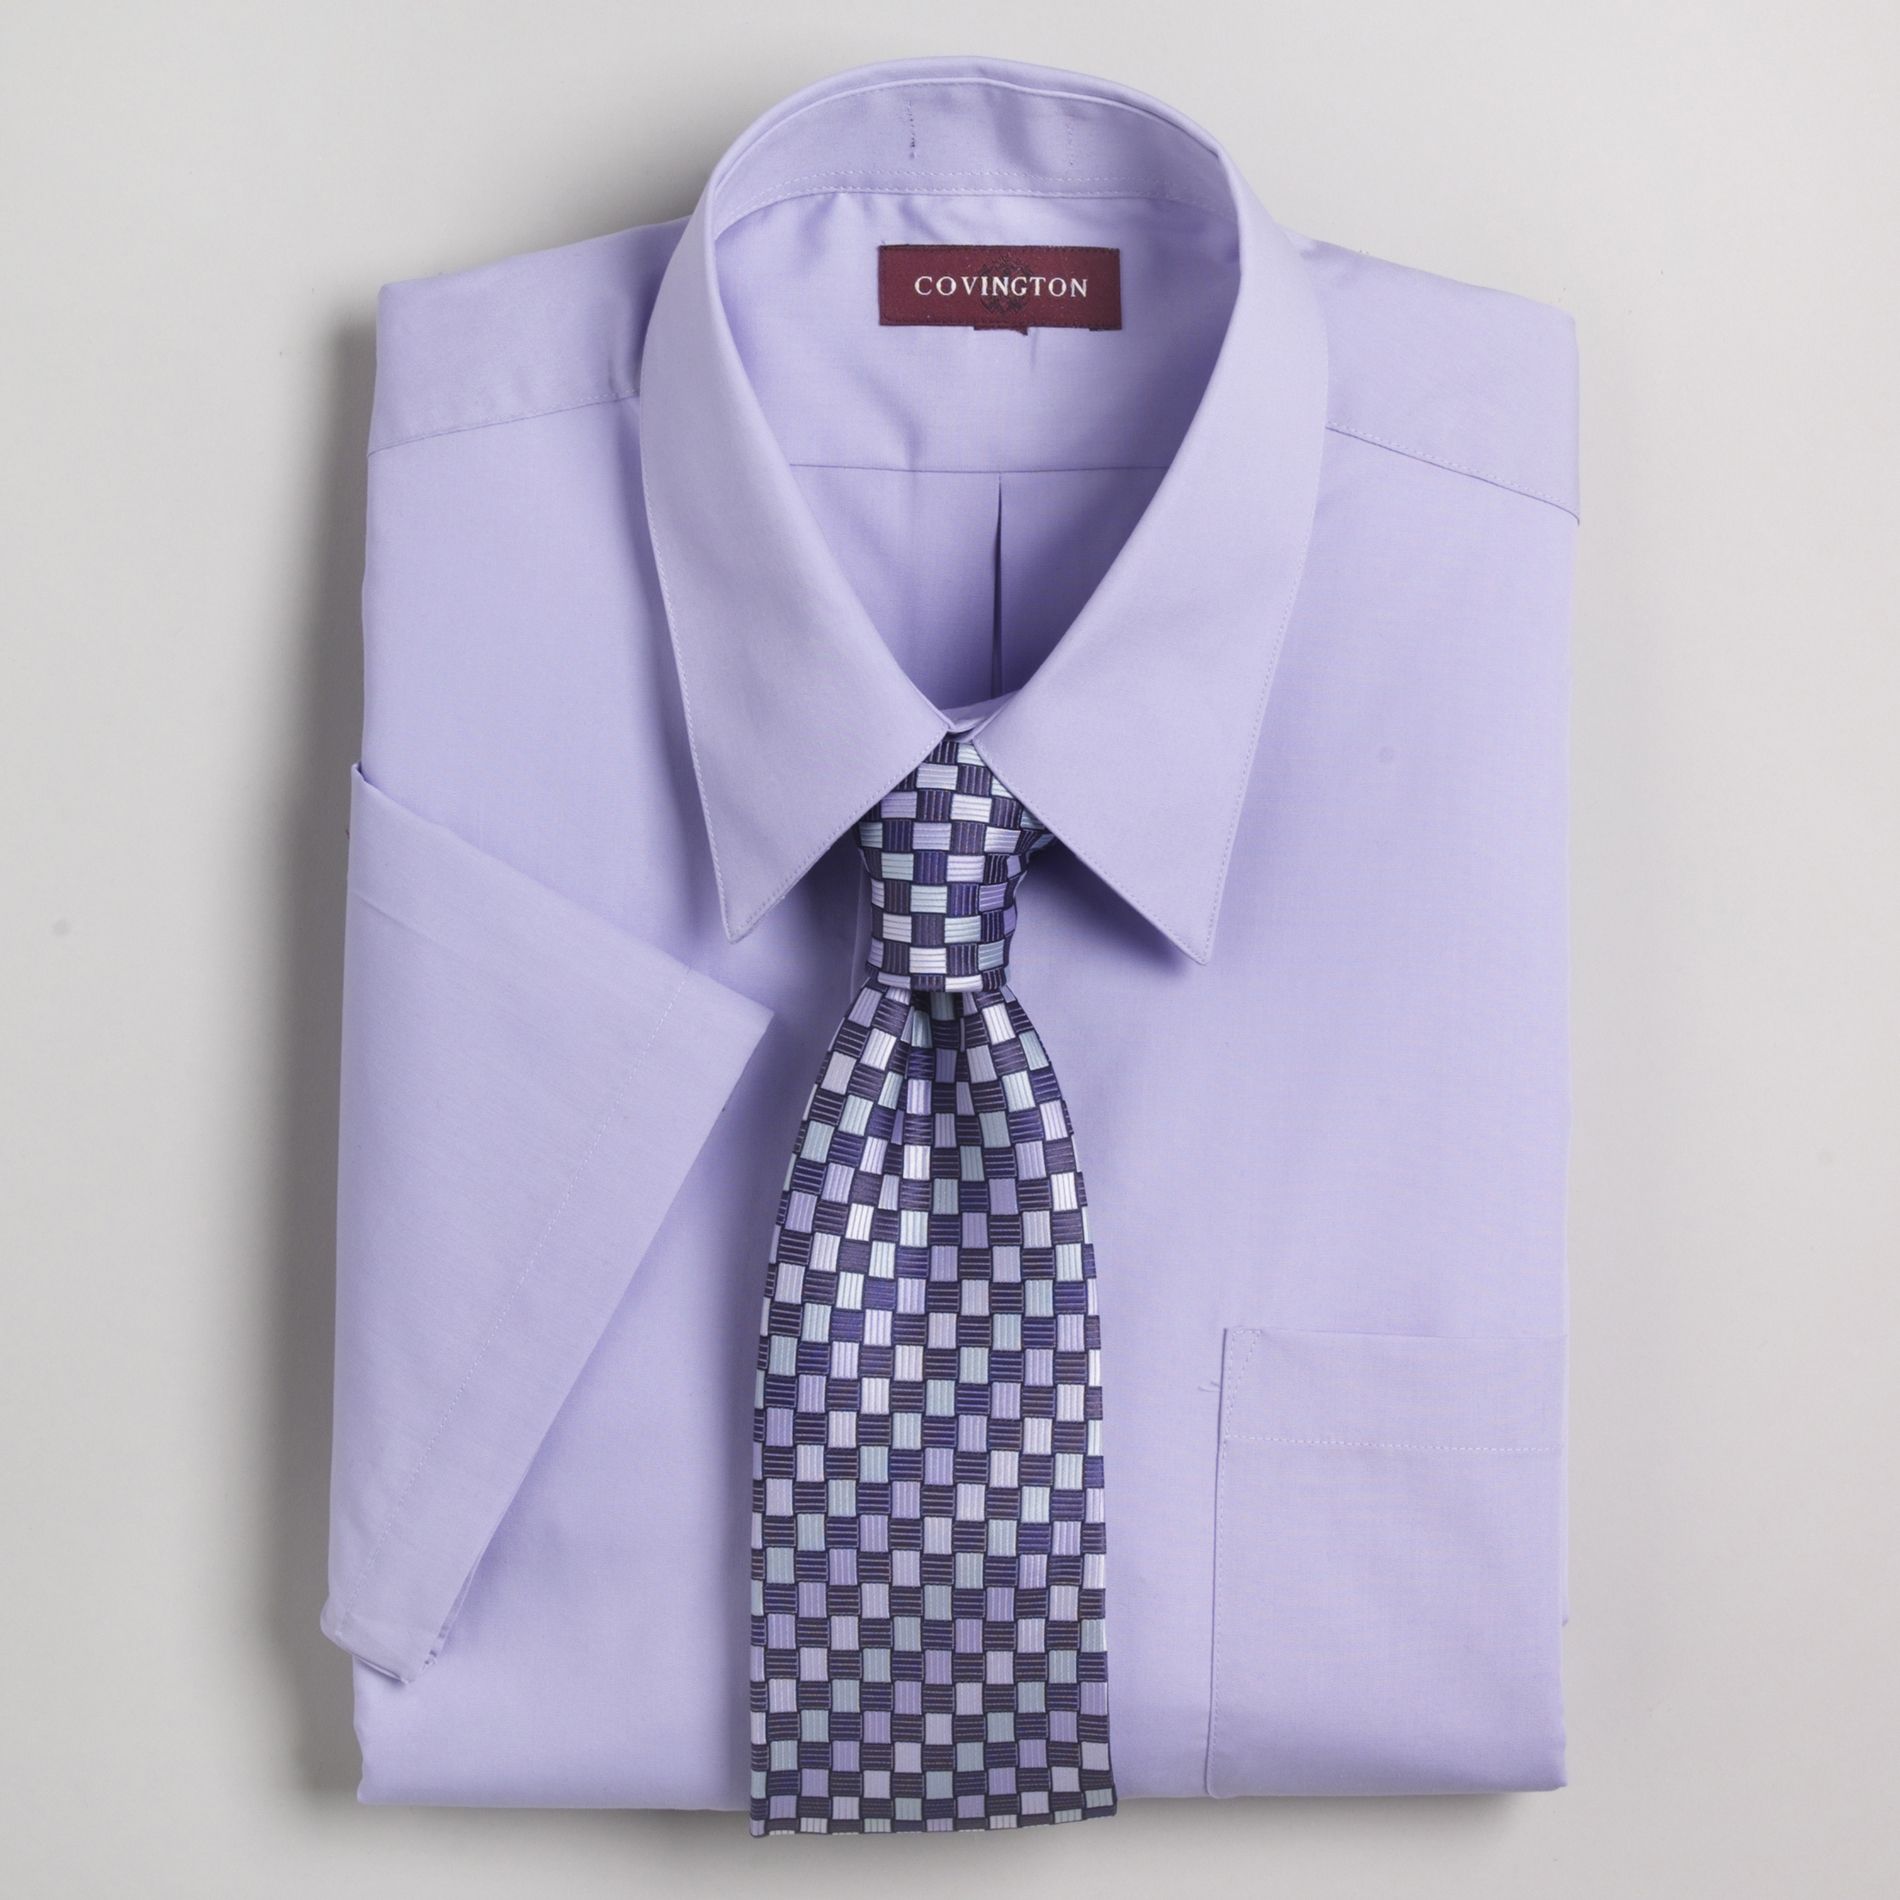 Covington Short Sleeve Dress Shirt and Silk Tie Box Set